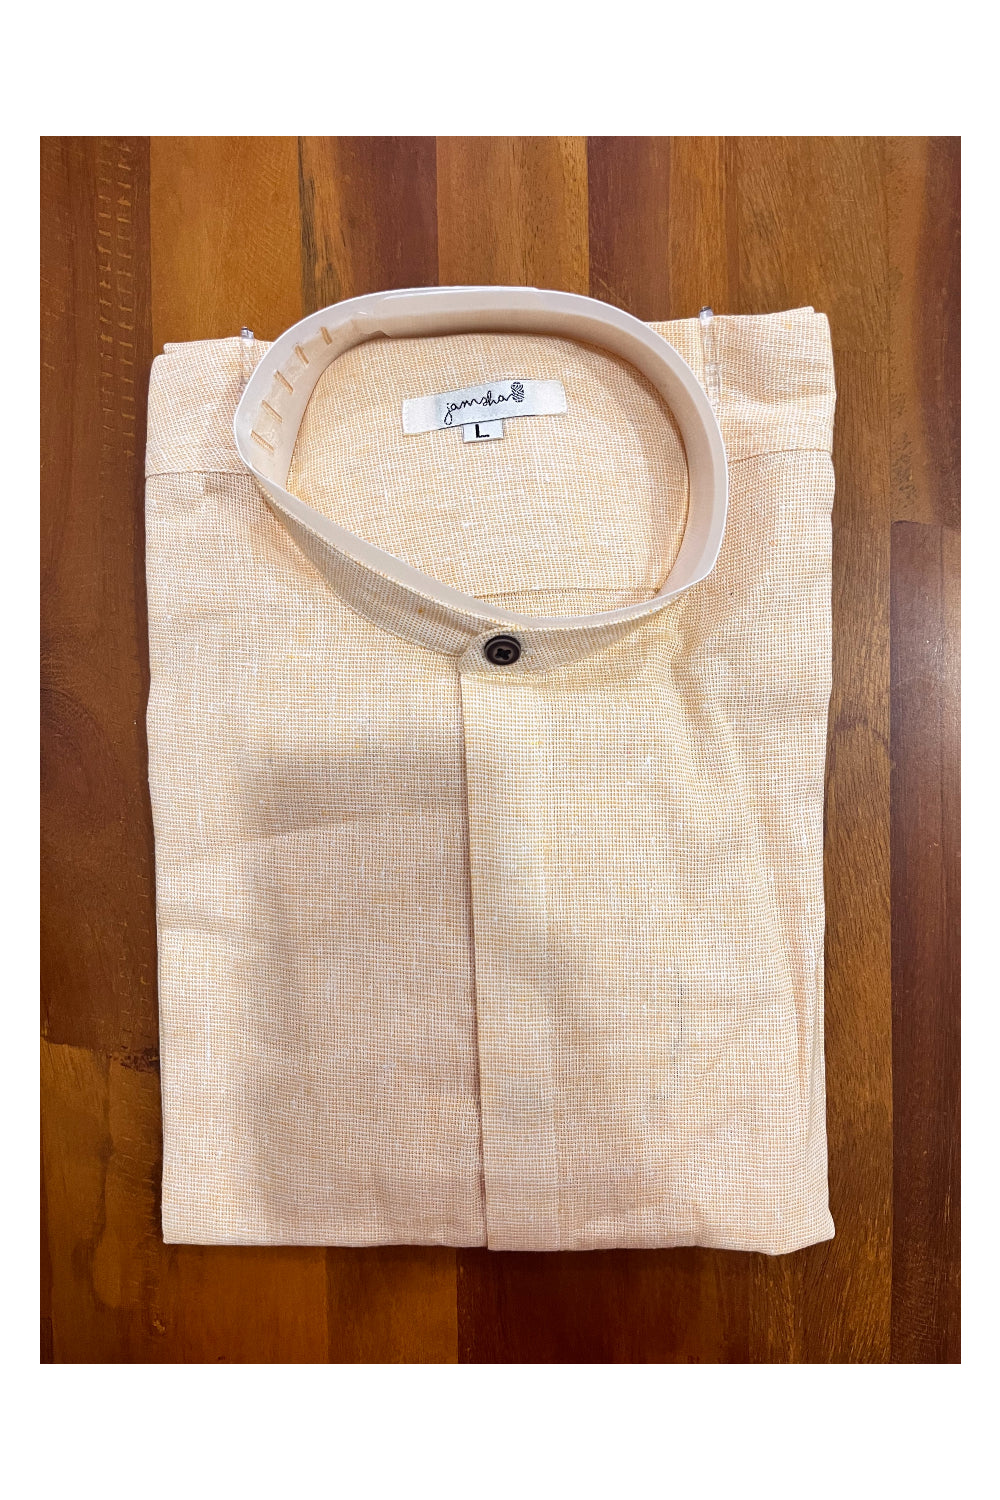 Southloom Jaipur Rough Cotton Light Peach Mandarin Collar Shirt (Full Sleeves)